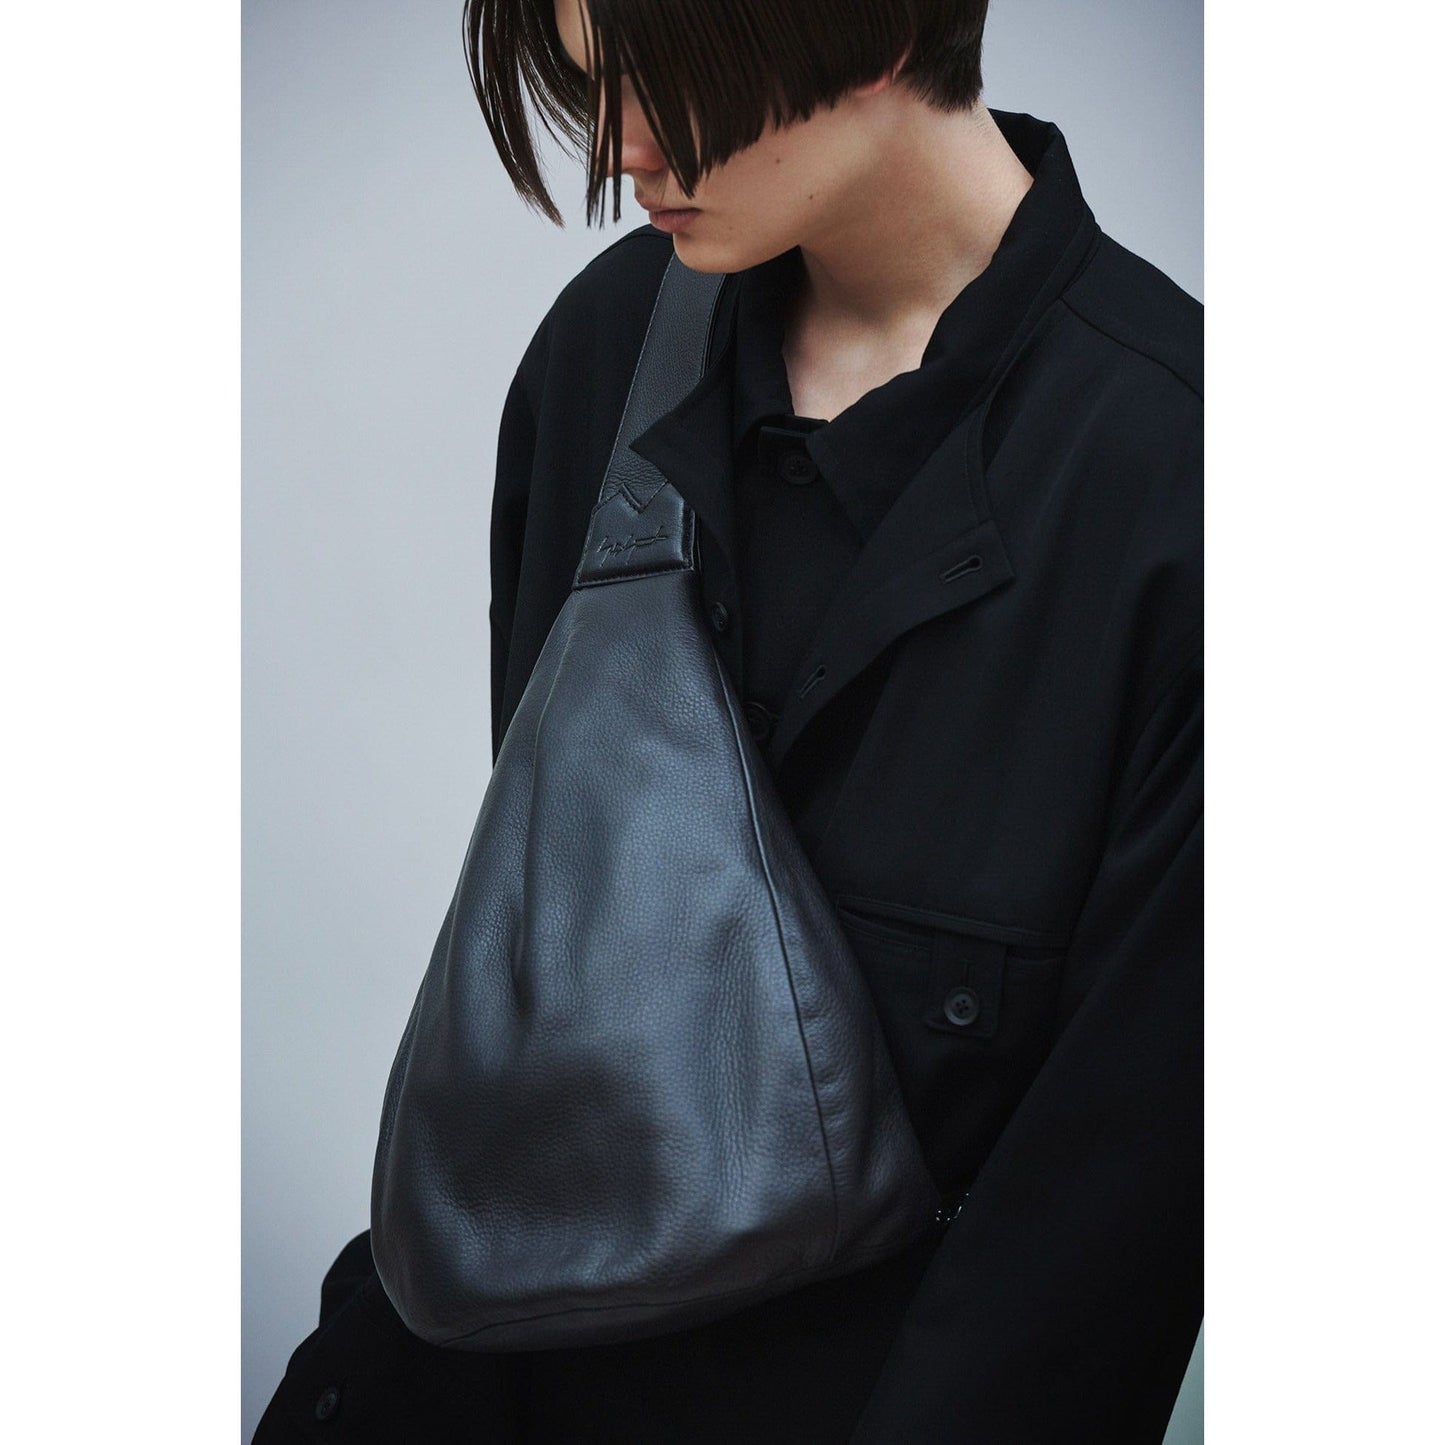 Yohji Yamamoto Handbags Black / Cow Leather / 34cm x 31cm x 15 cm Yohji Yamamoto Cross Body Bag M